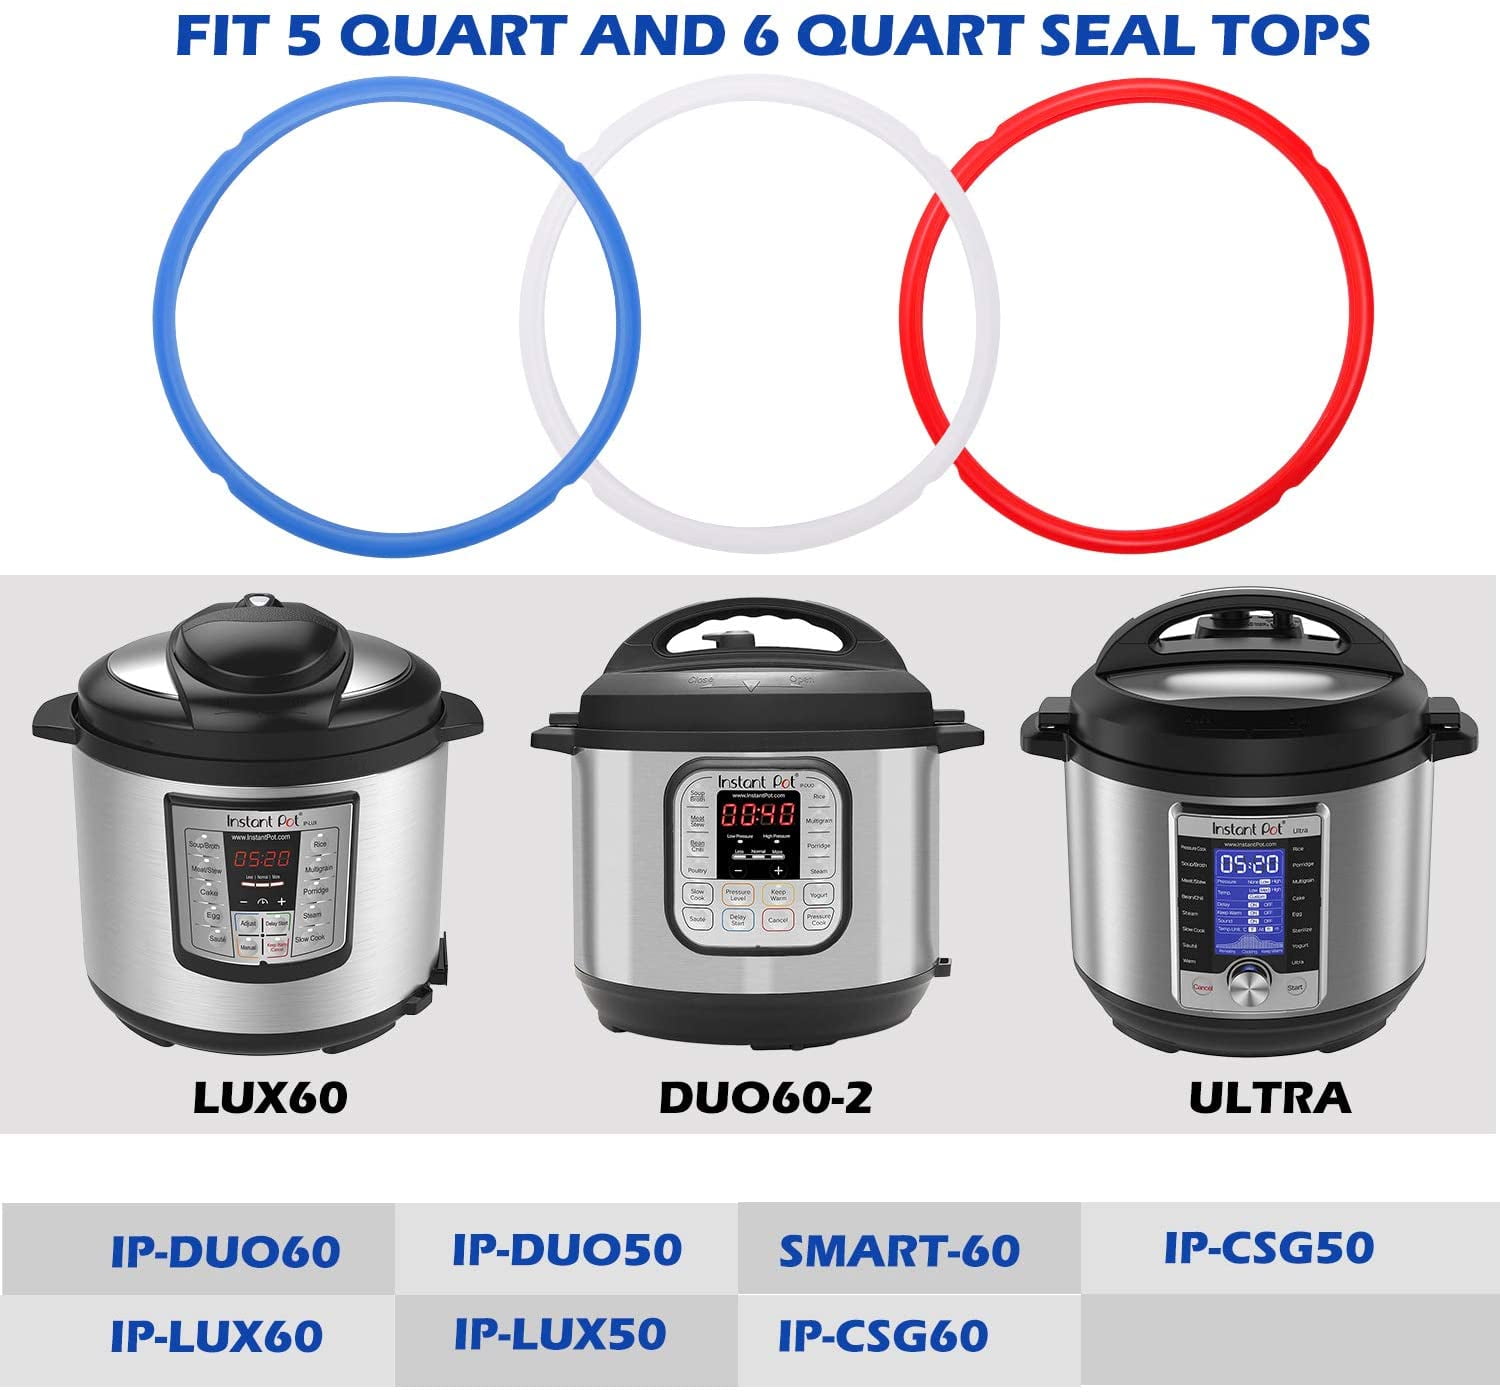 Mocoosy 3PCS Silicone Sealing Ring for Instant Pot 6 Qt Insta Pot Seals  Replacement Gasket 6 Quart Instapot Sealing Ring for 6/5Qt And IP-DUO60,  IP-LUX60, IP-DUO50, Smart-60, IP-CSG60 